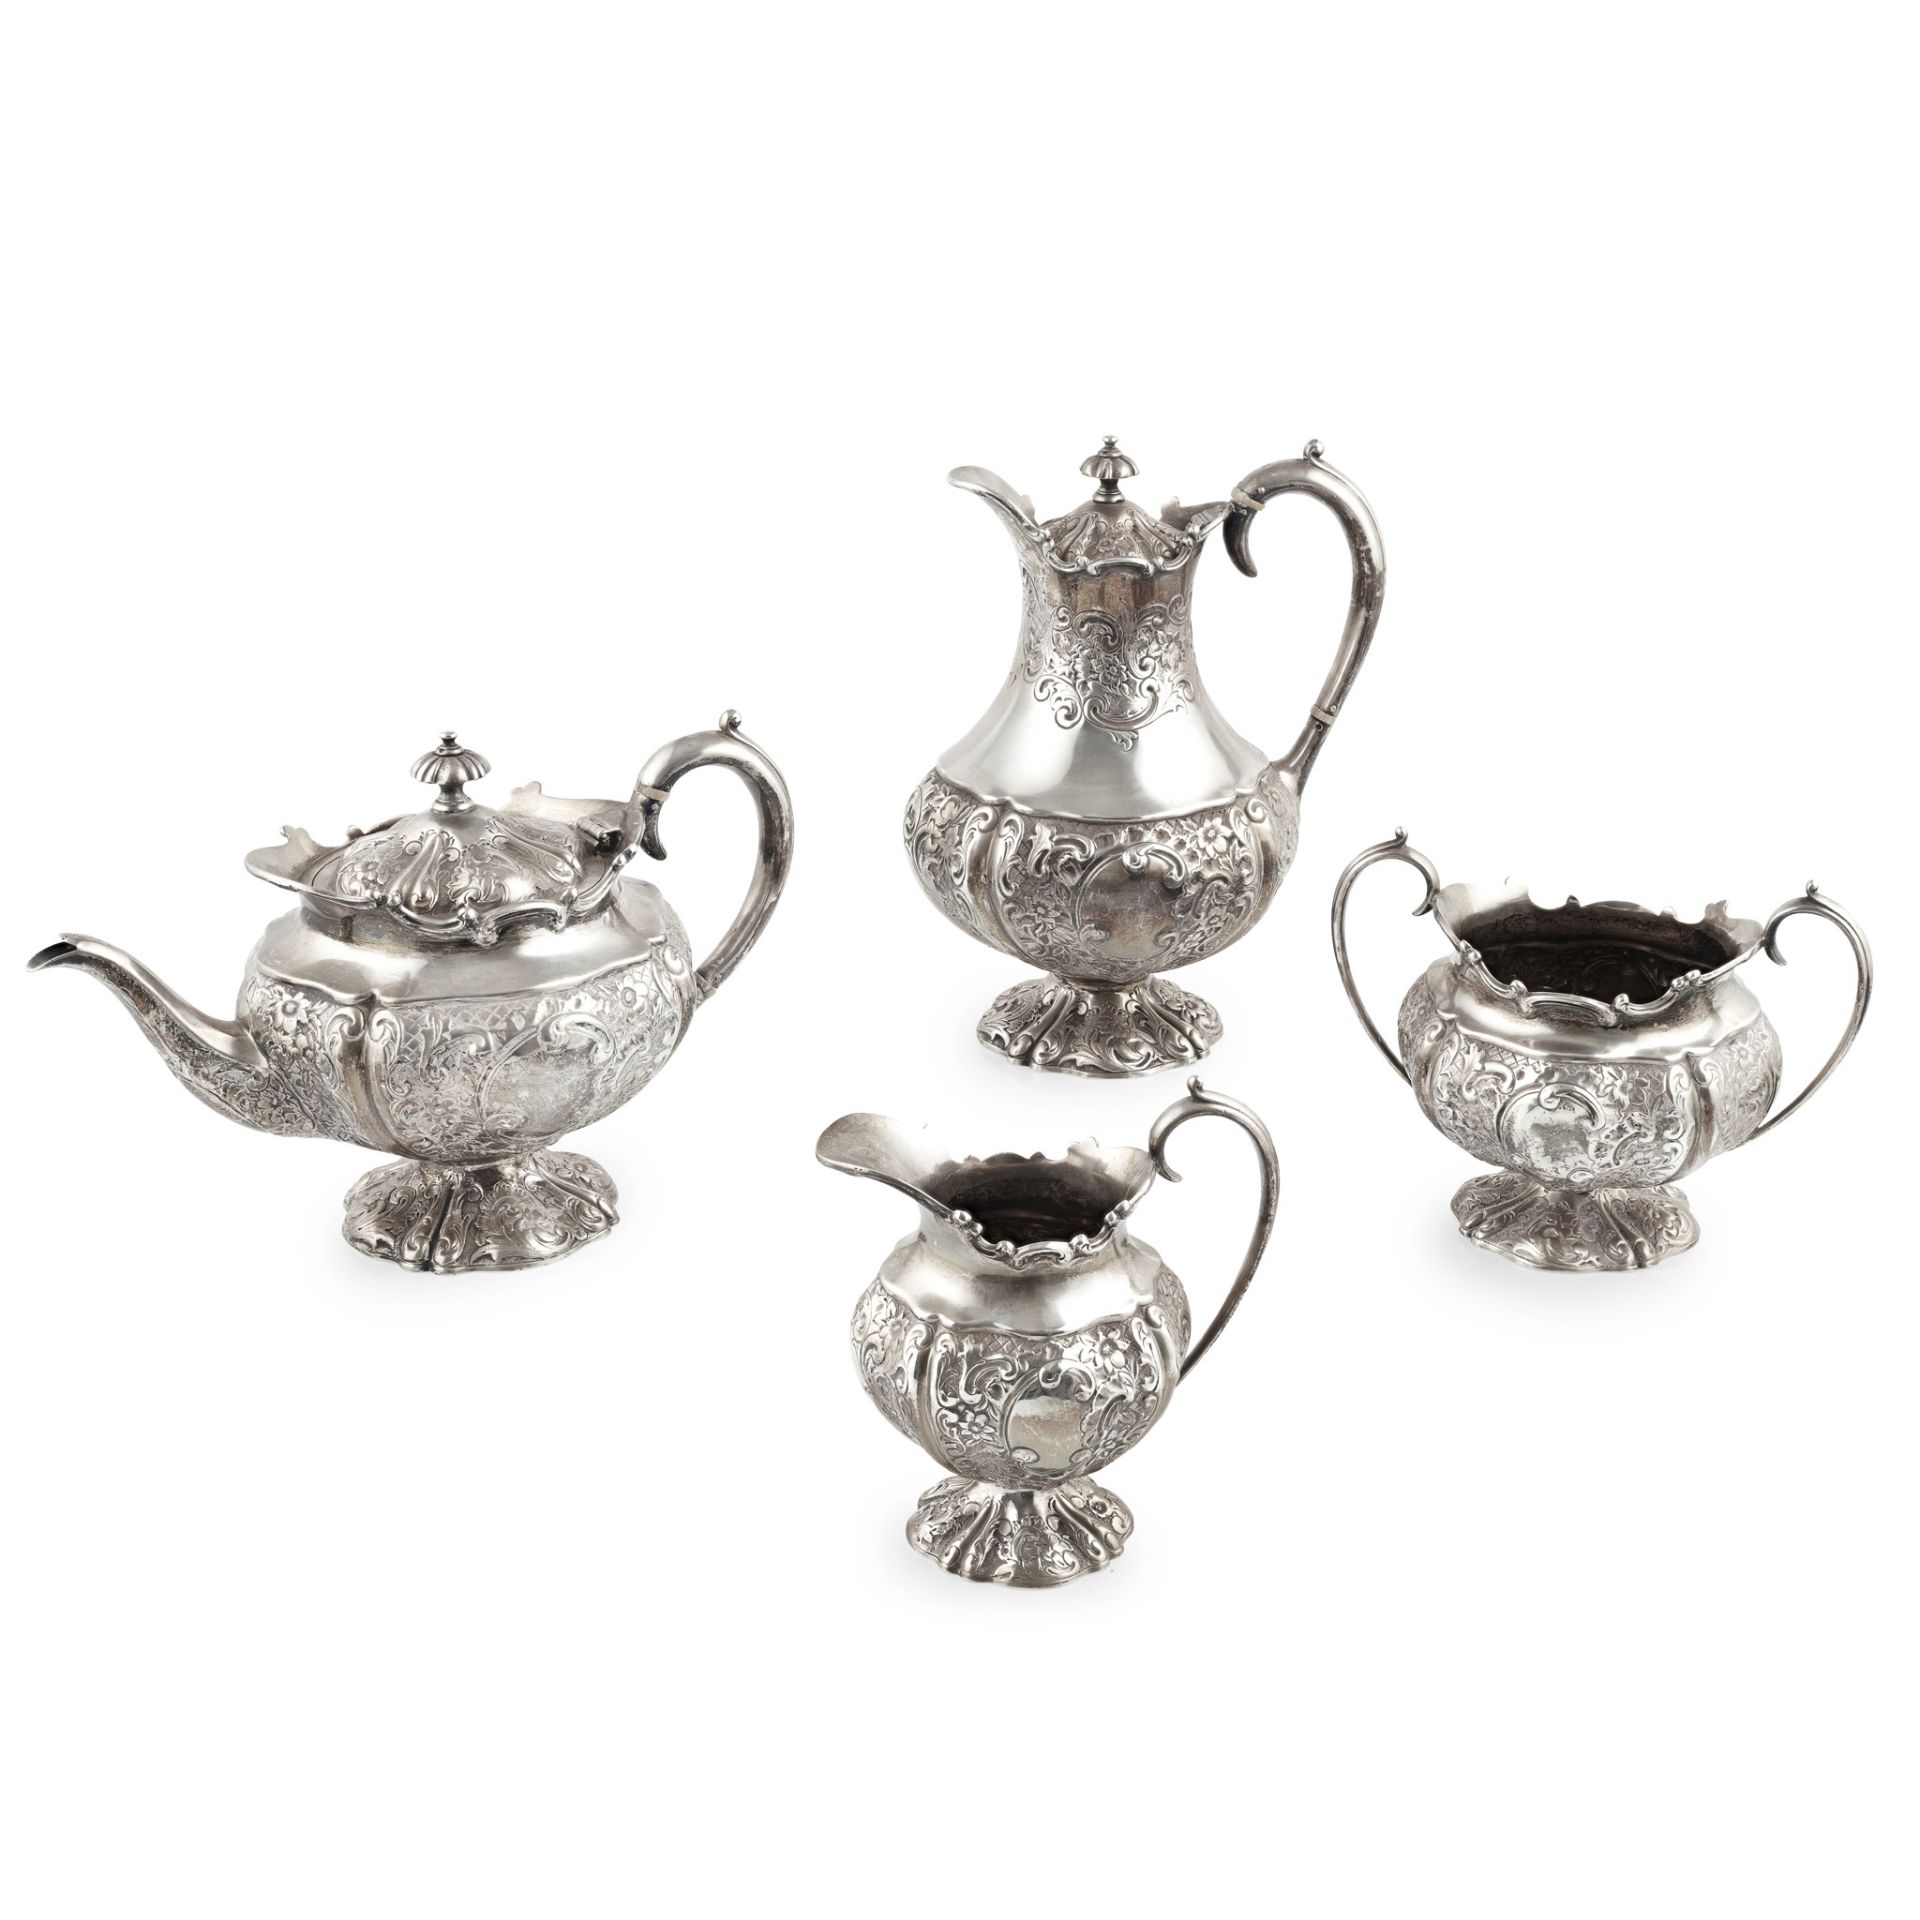 Y A late Victorian four-piece tea set